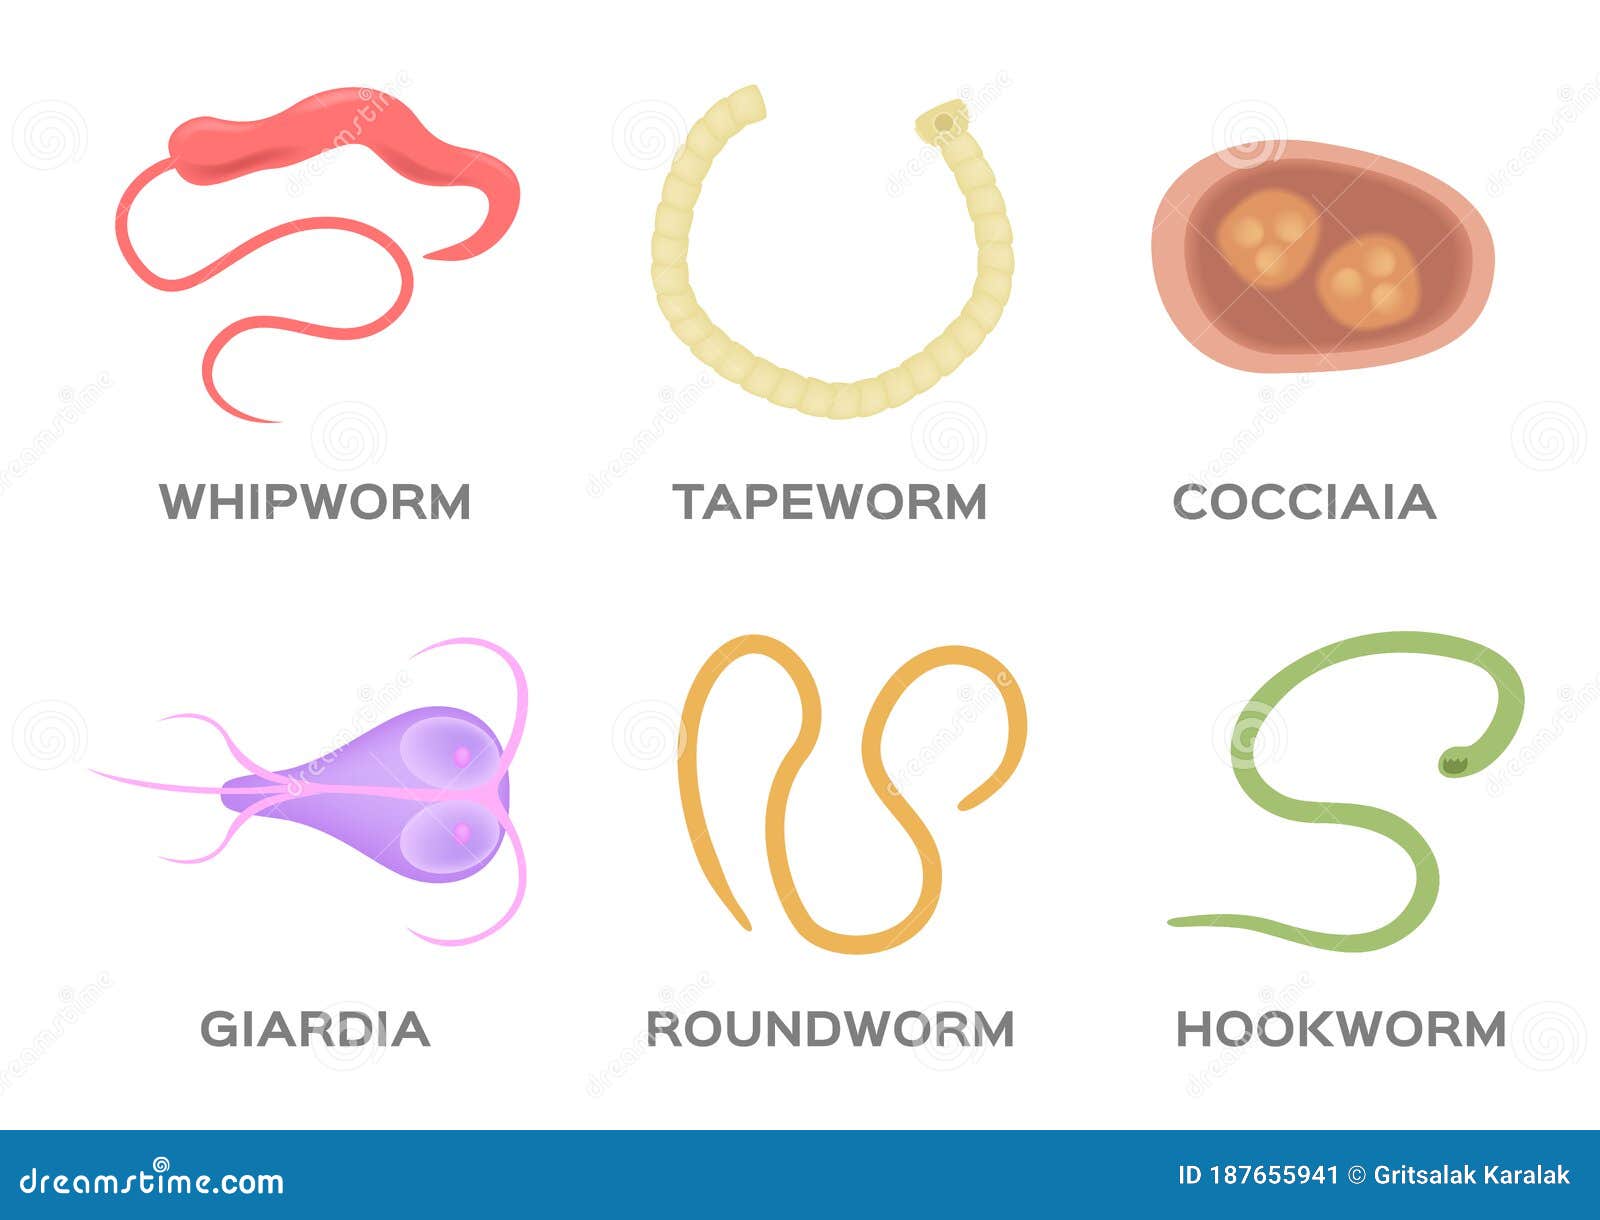 pinworms a giardiasis)